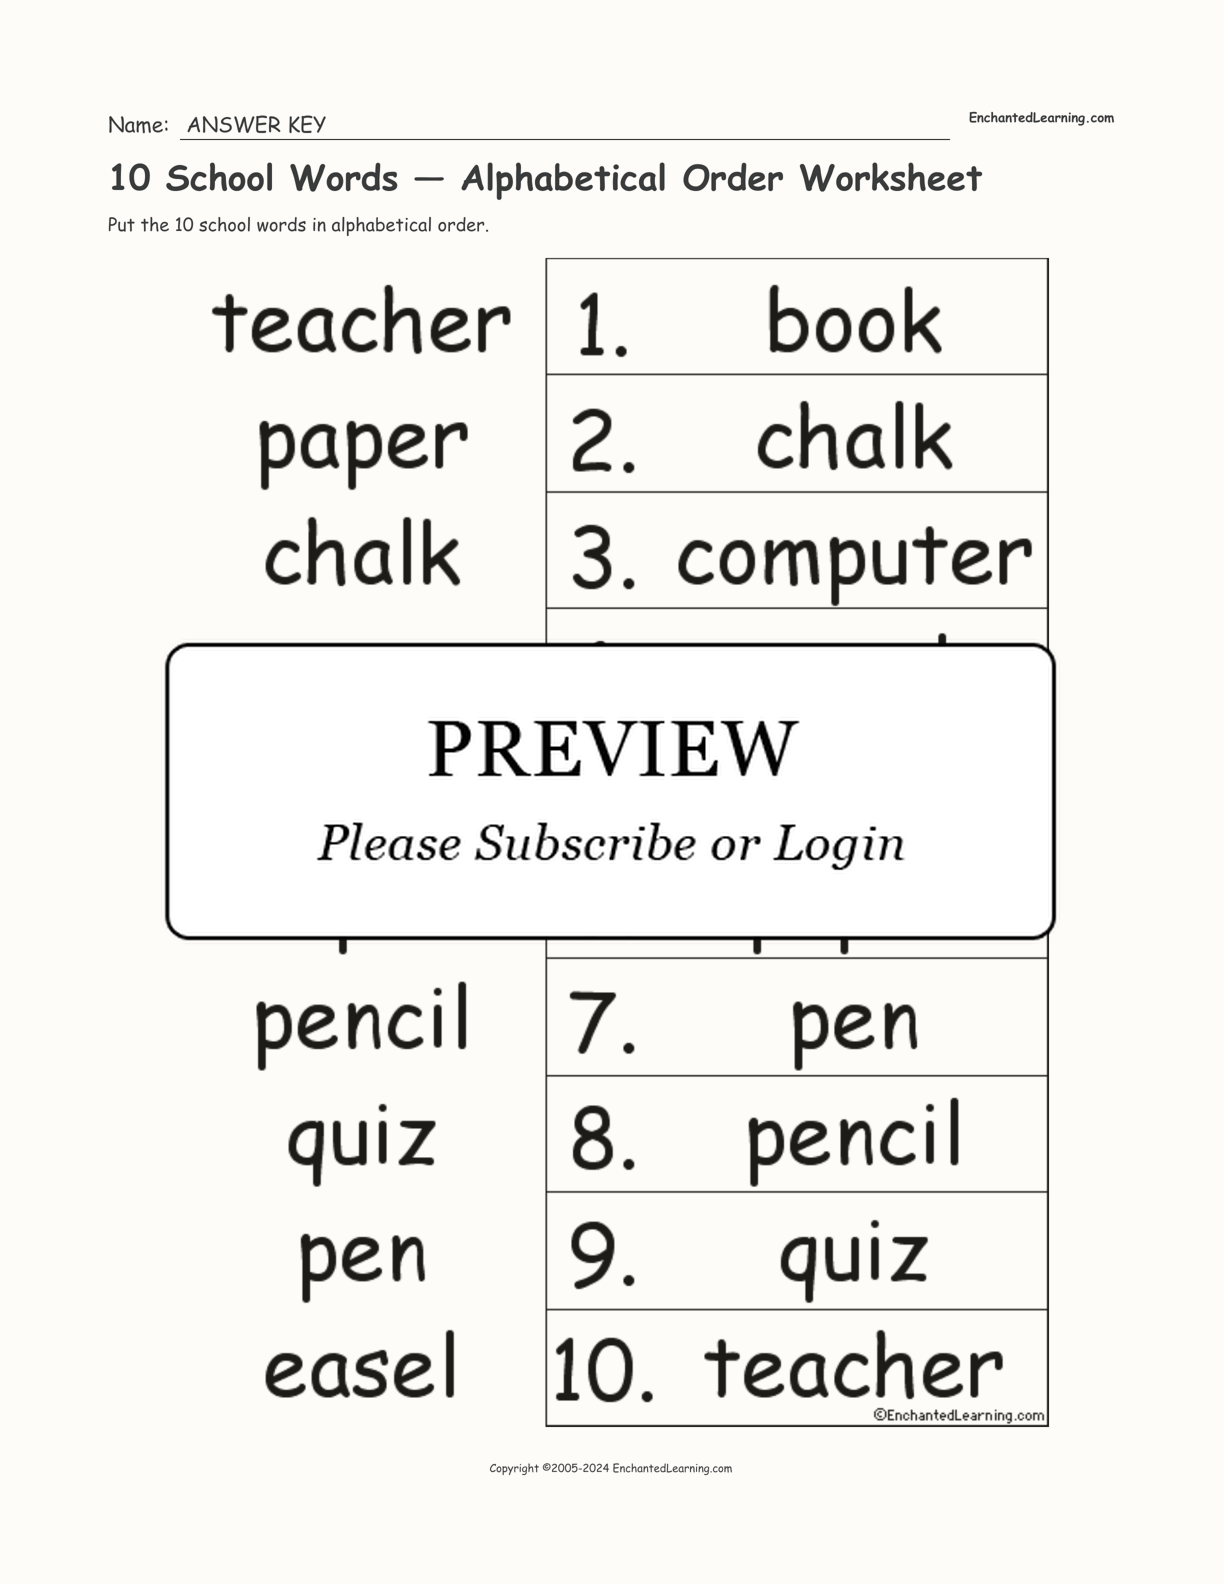 10 School Words — Alphabetical Order Worksheet interactive worksheet page 2